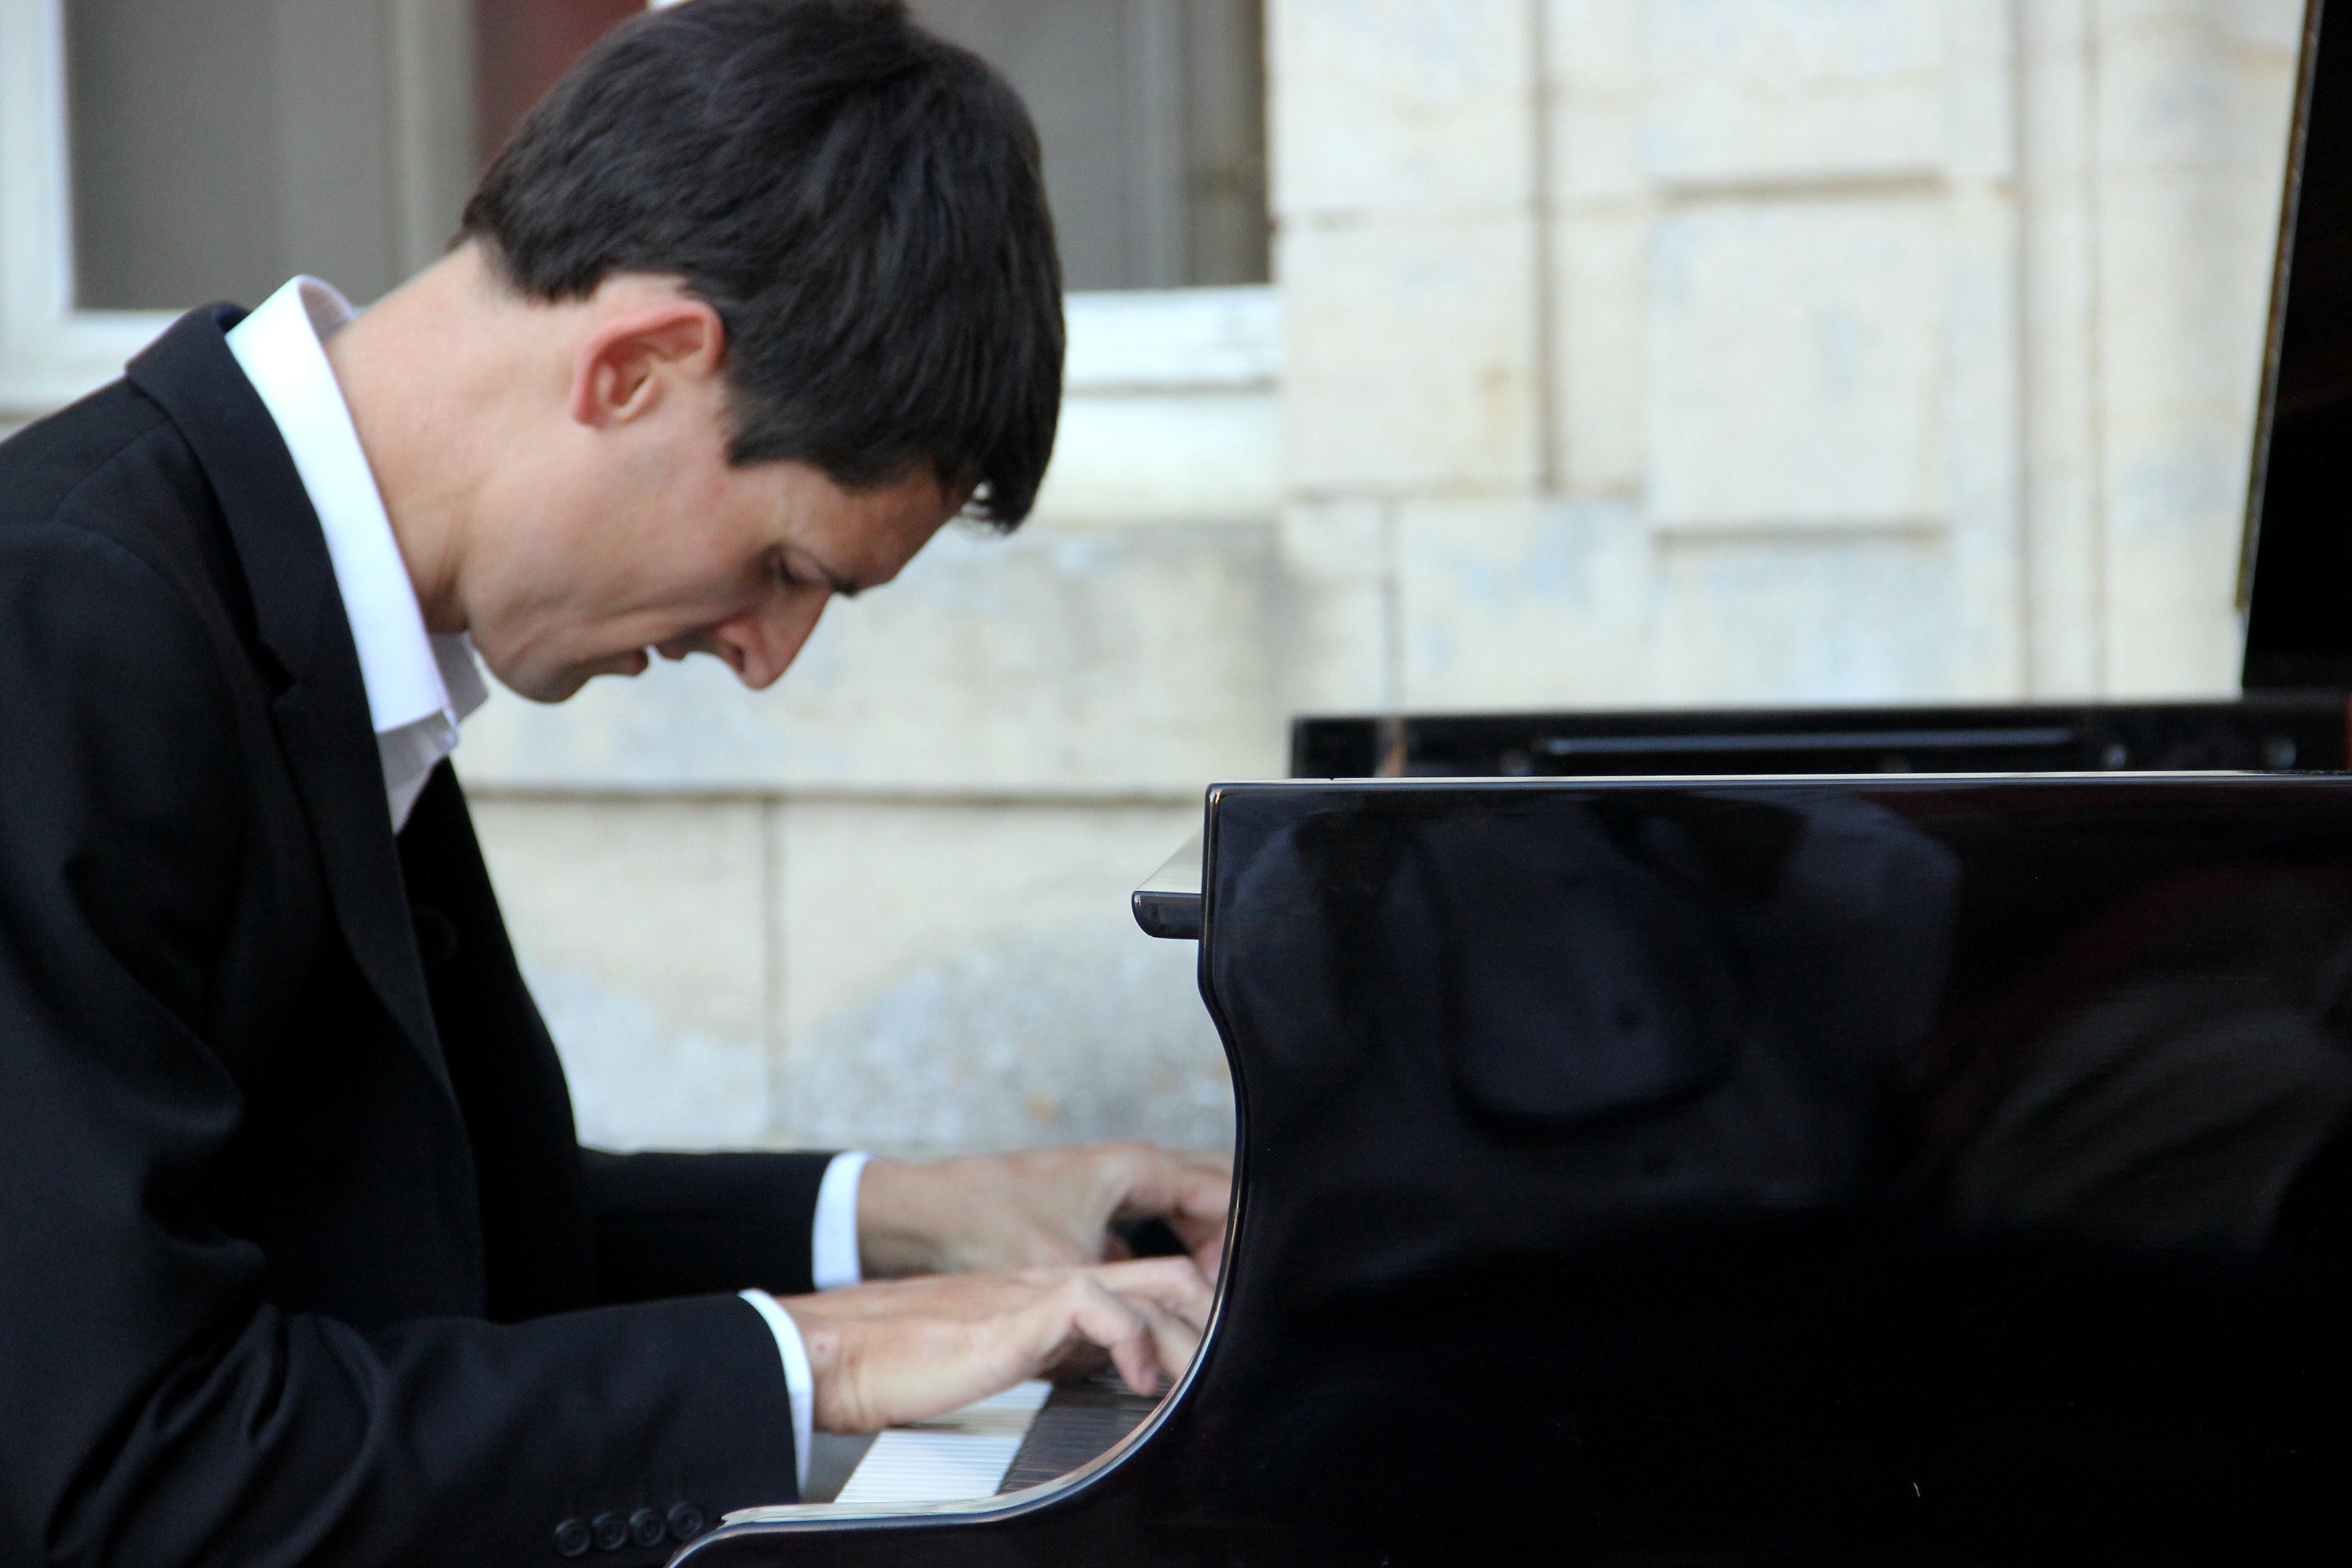 Jean-Baptiste Mathulin au piano